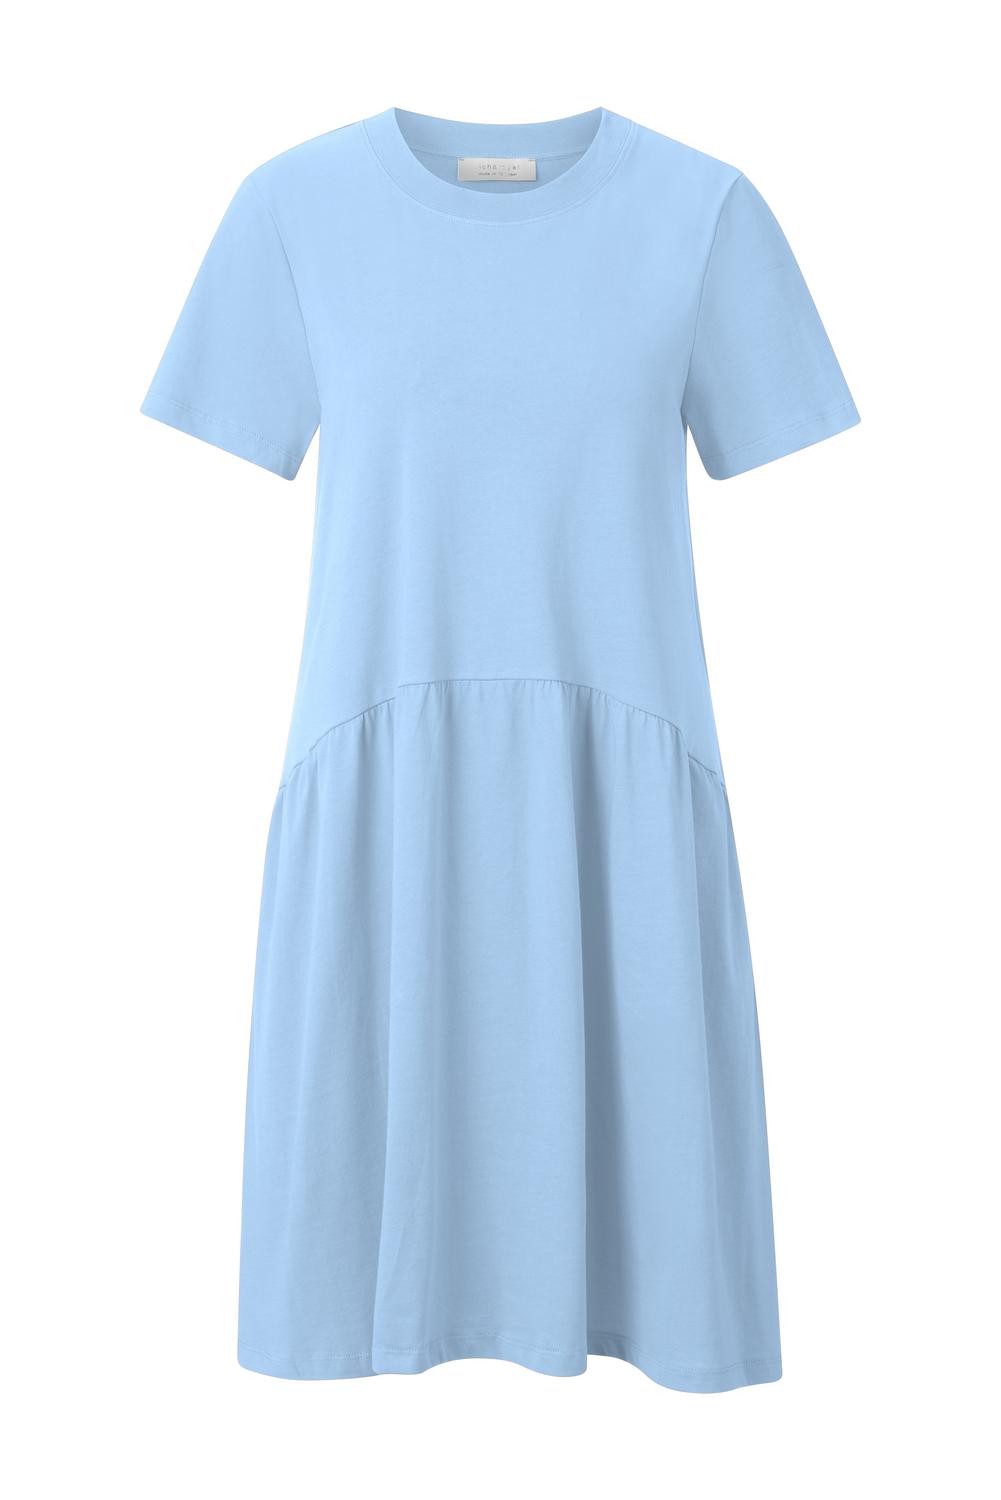 Rich & Royal Sommerkleid T-Shirt dress organic, cotton blue